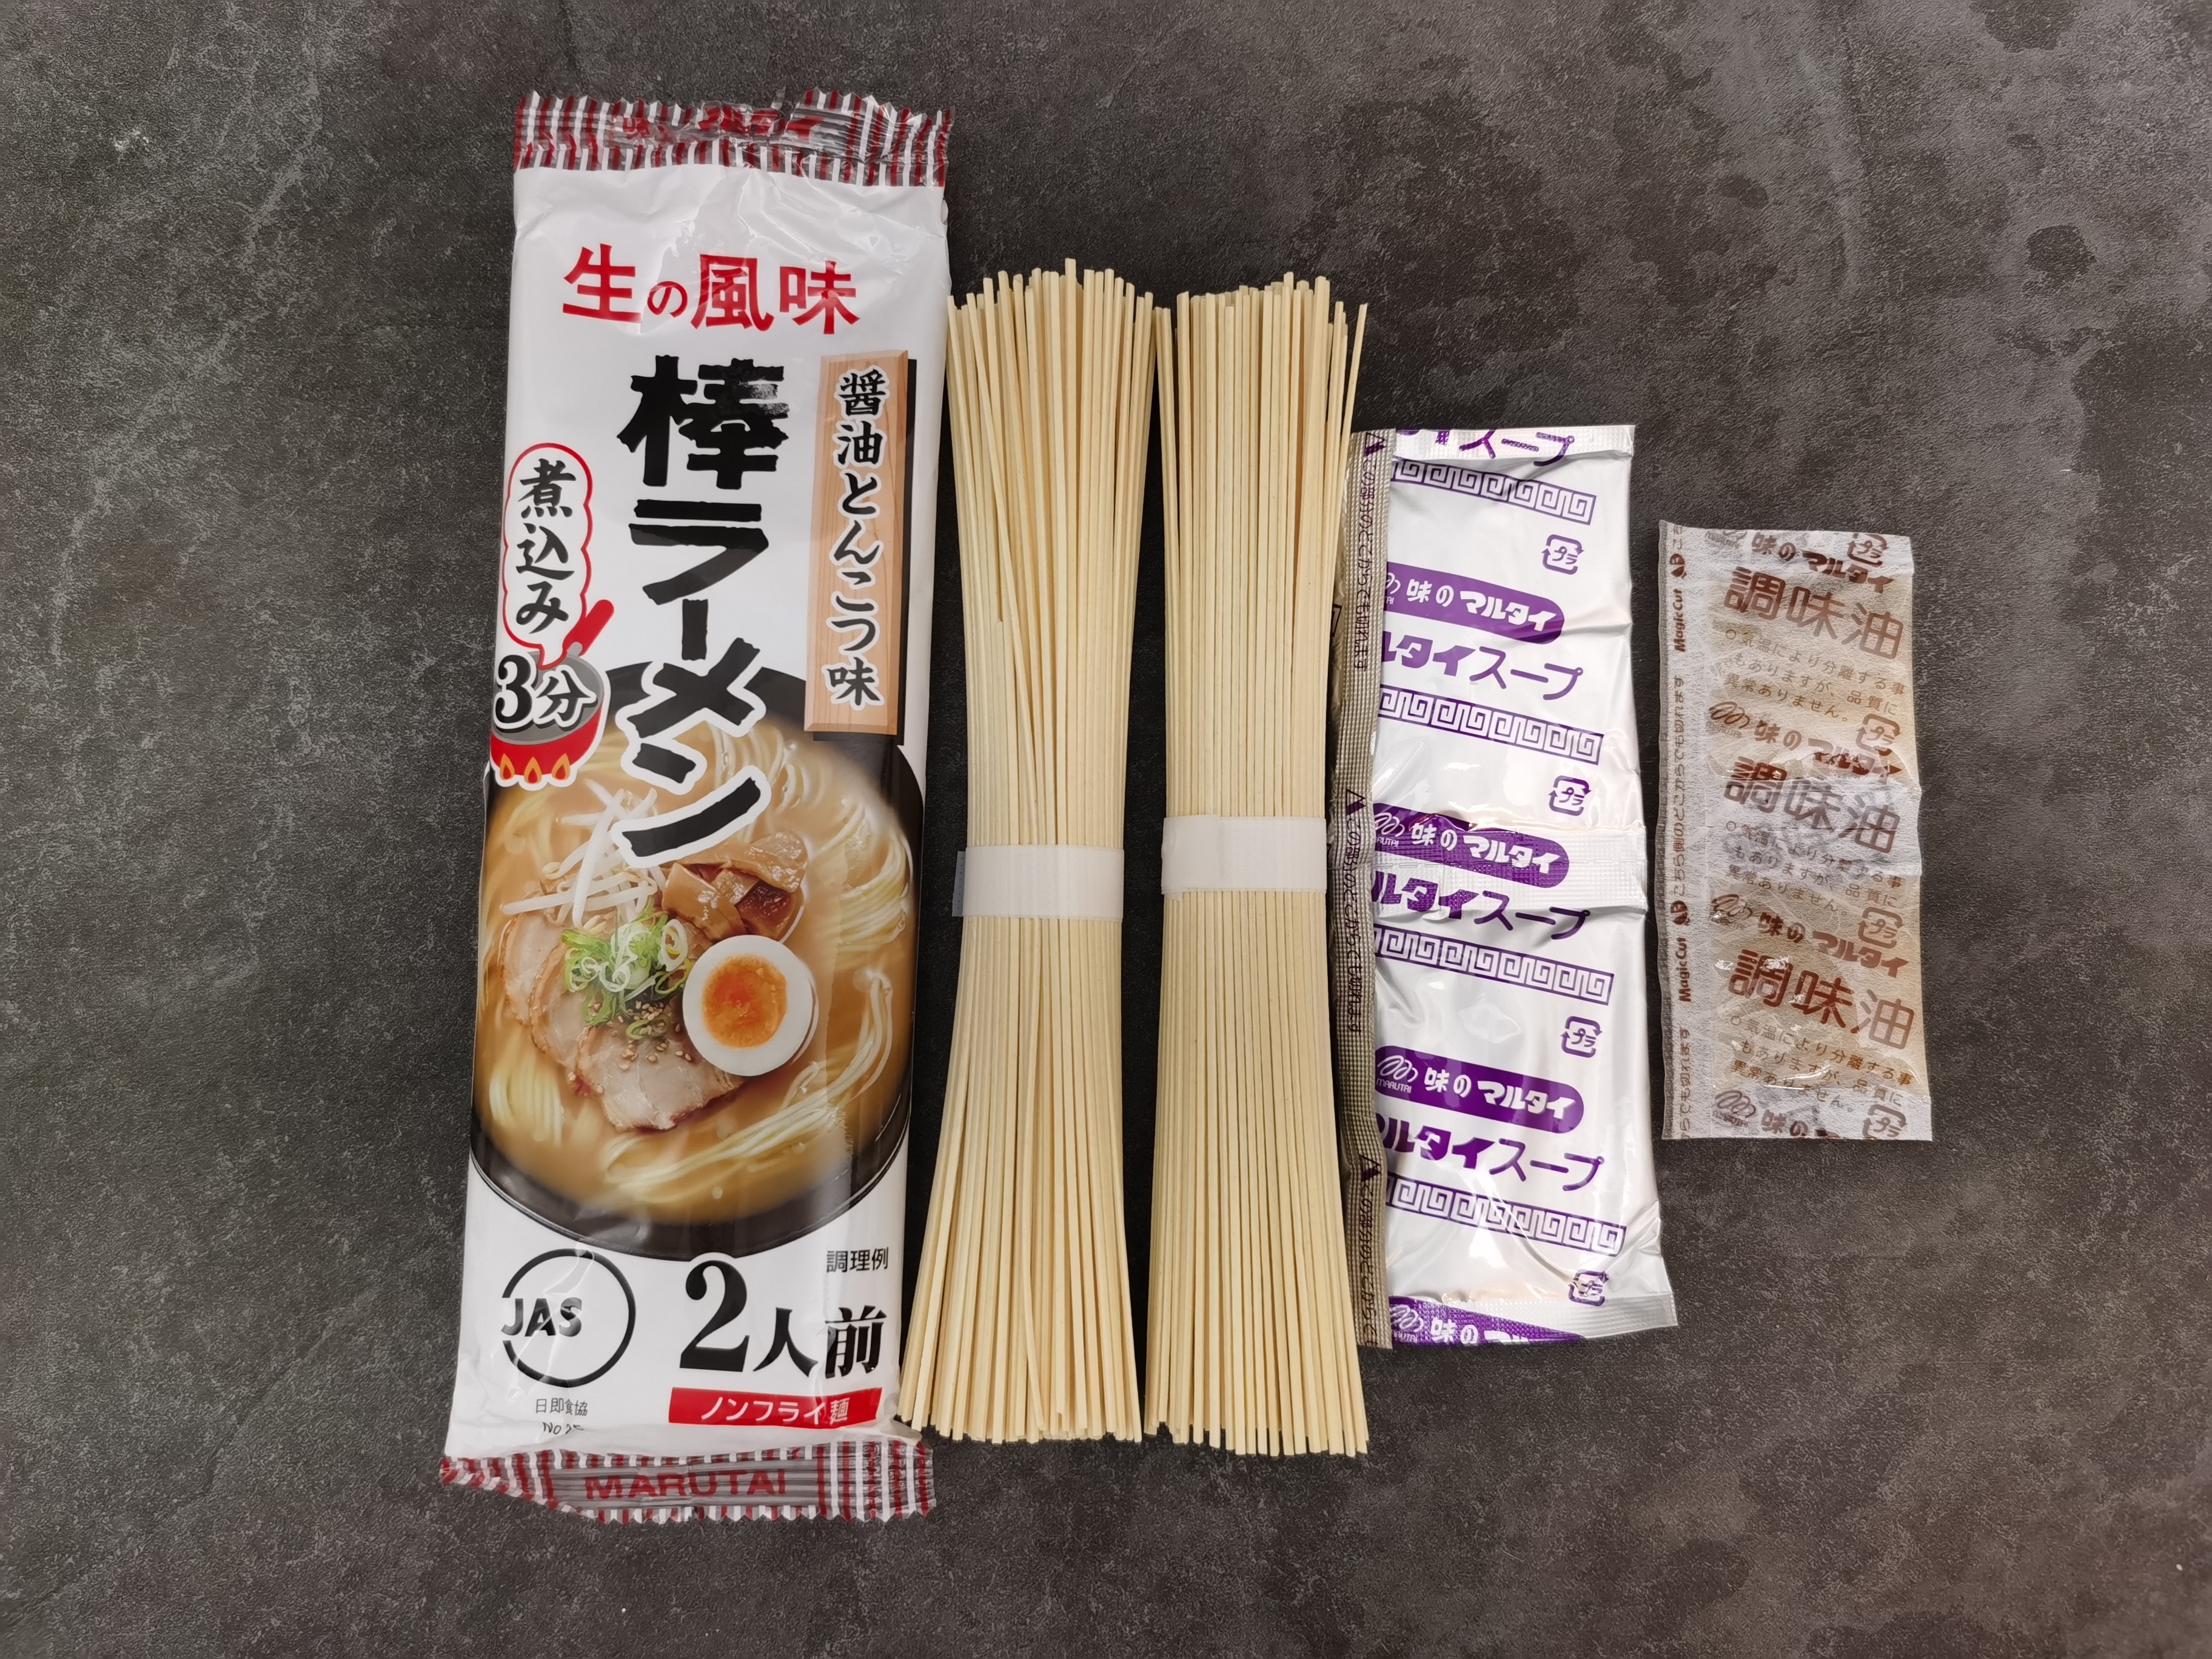 Shoyu Tonkotsu Flavour Instant Ramen by Marutai - Basic Chick